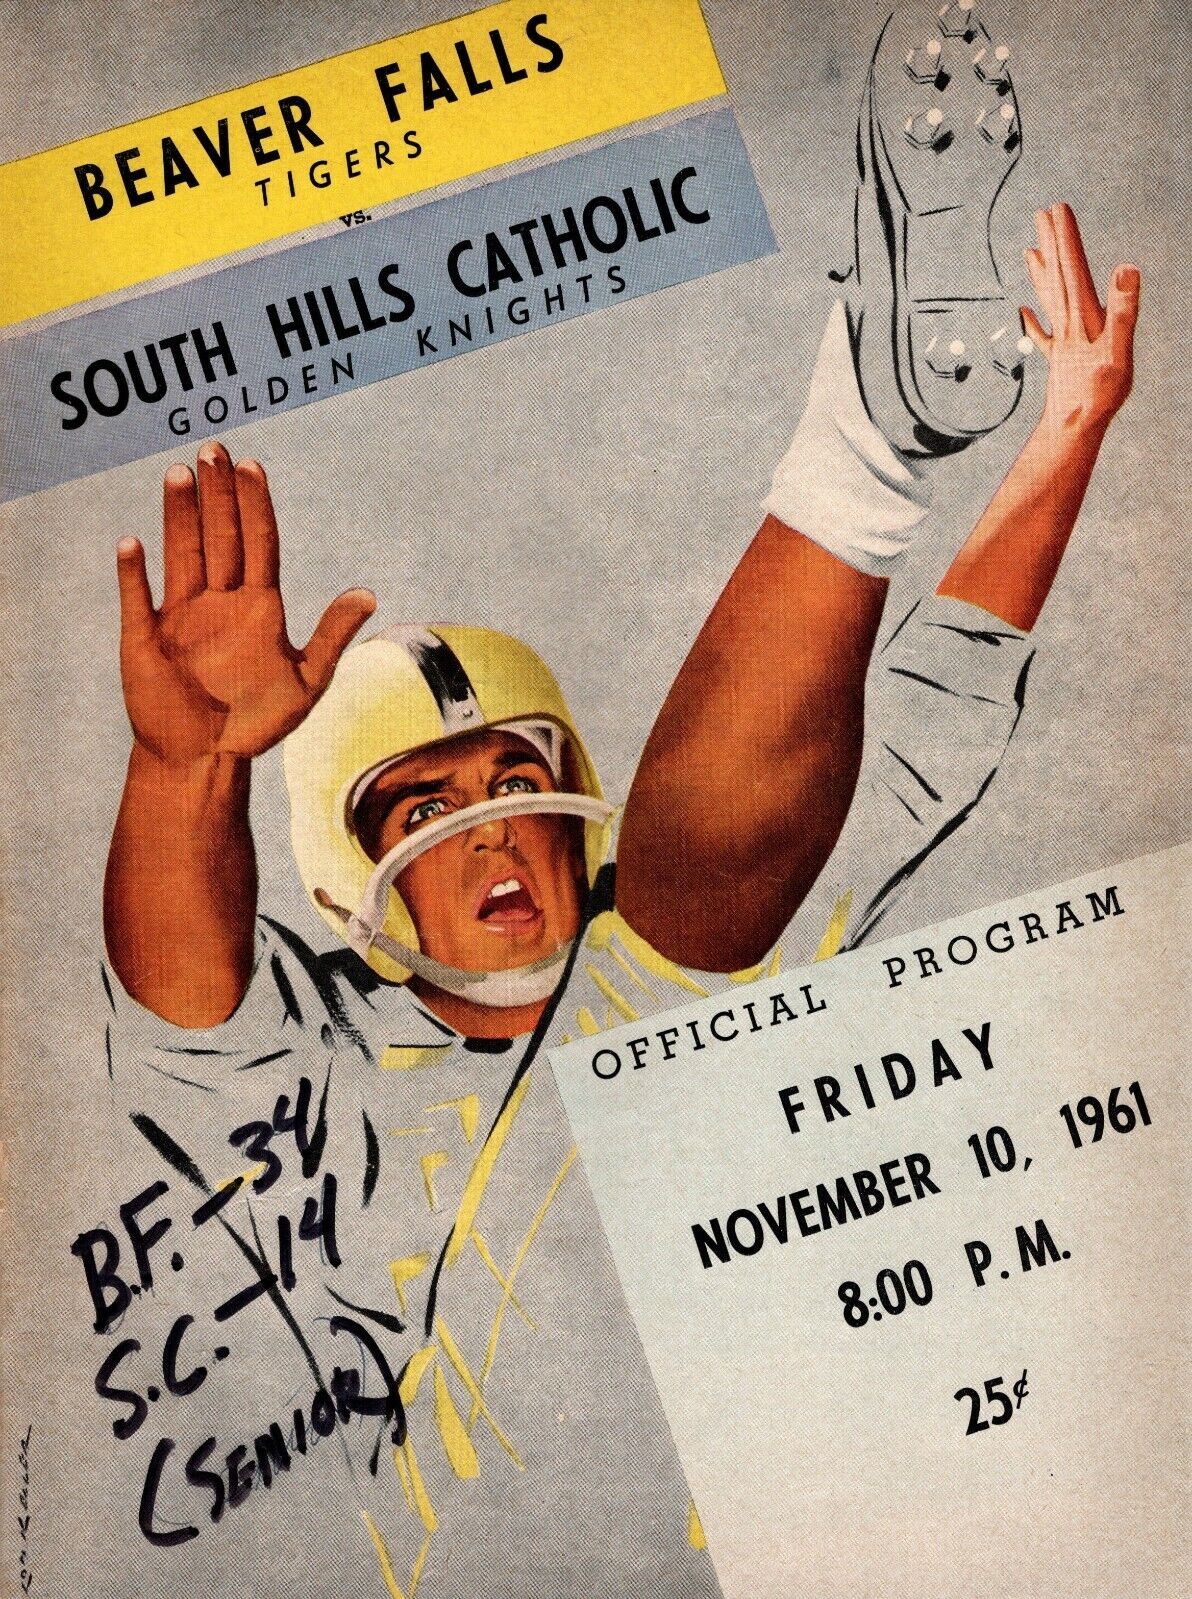 1961 Beaver Falls Football Program Picture of Joe Namath 1960 Championship Team